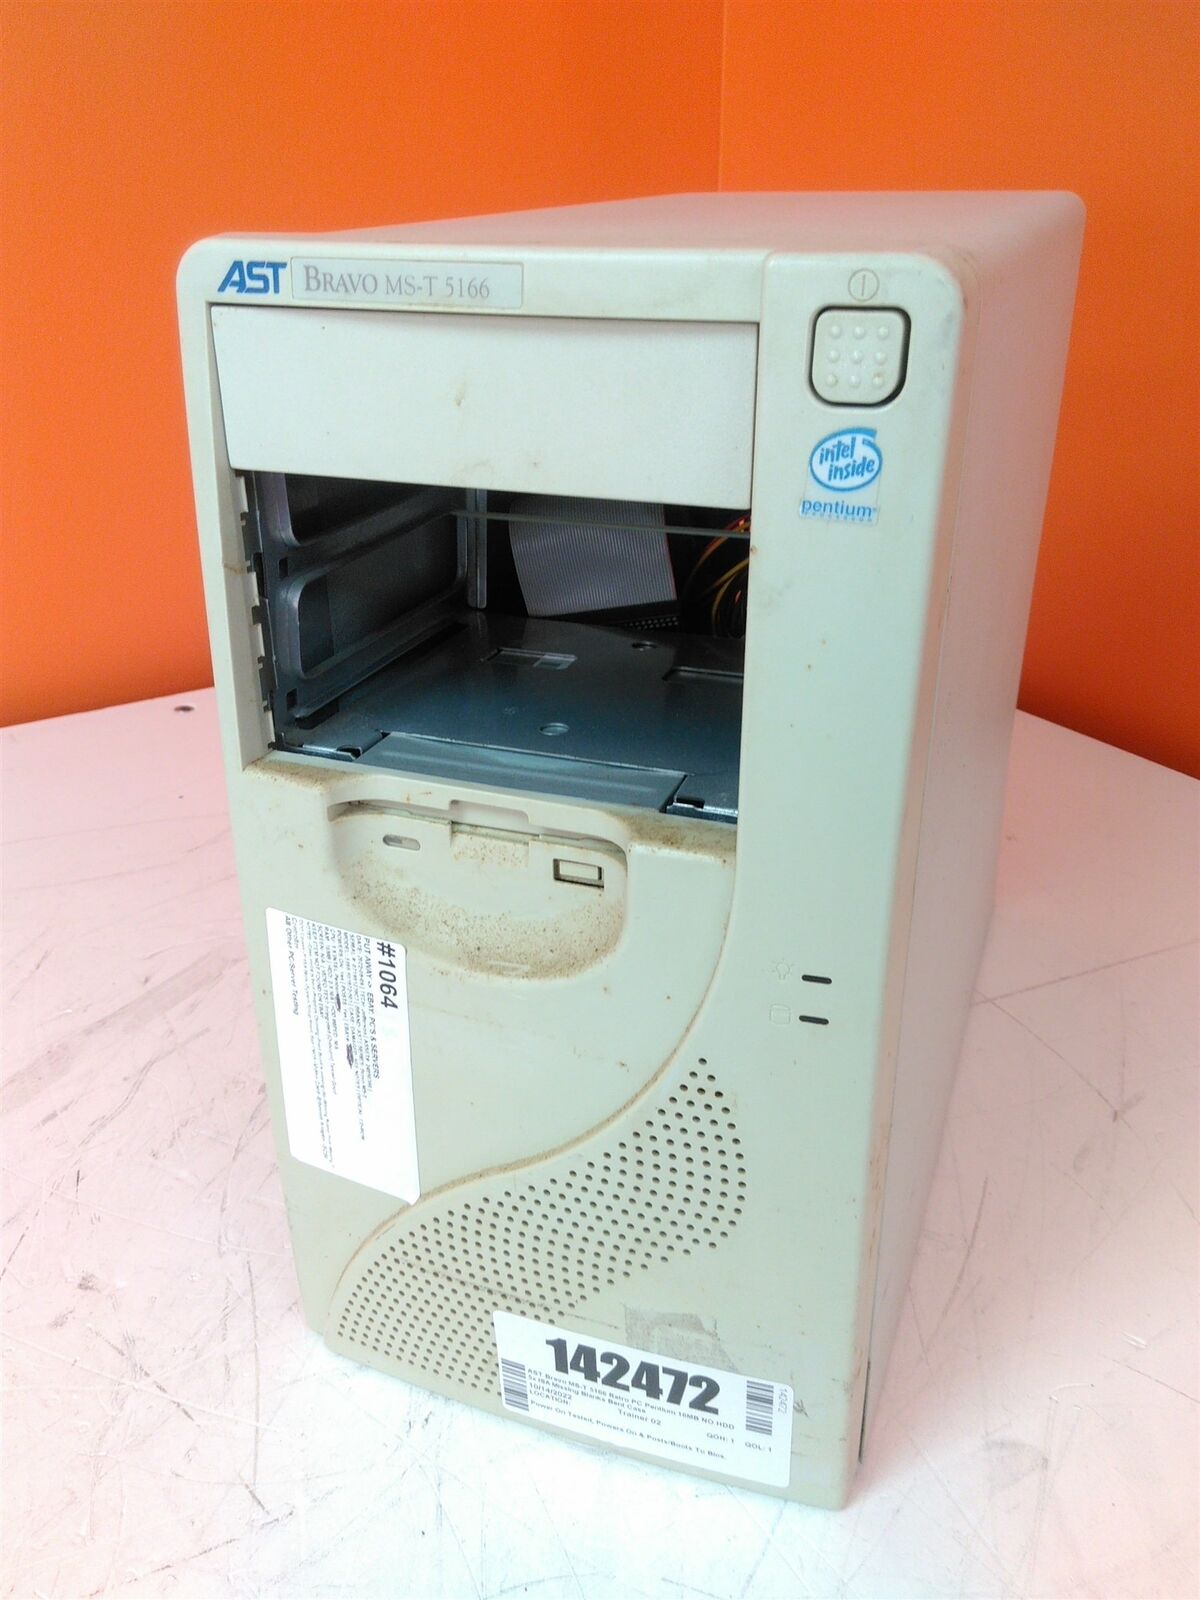 AST Bravo MS-T 5166 Retro PC Intel Pentium 166MHz 16MB NO HDD 5x ISA Bent Case